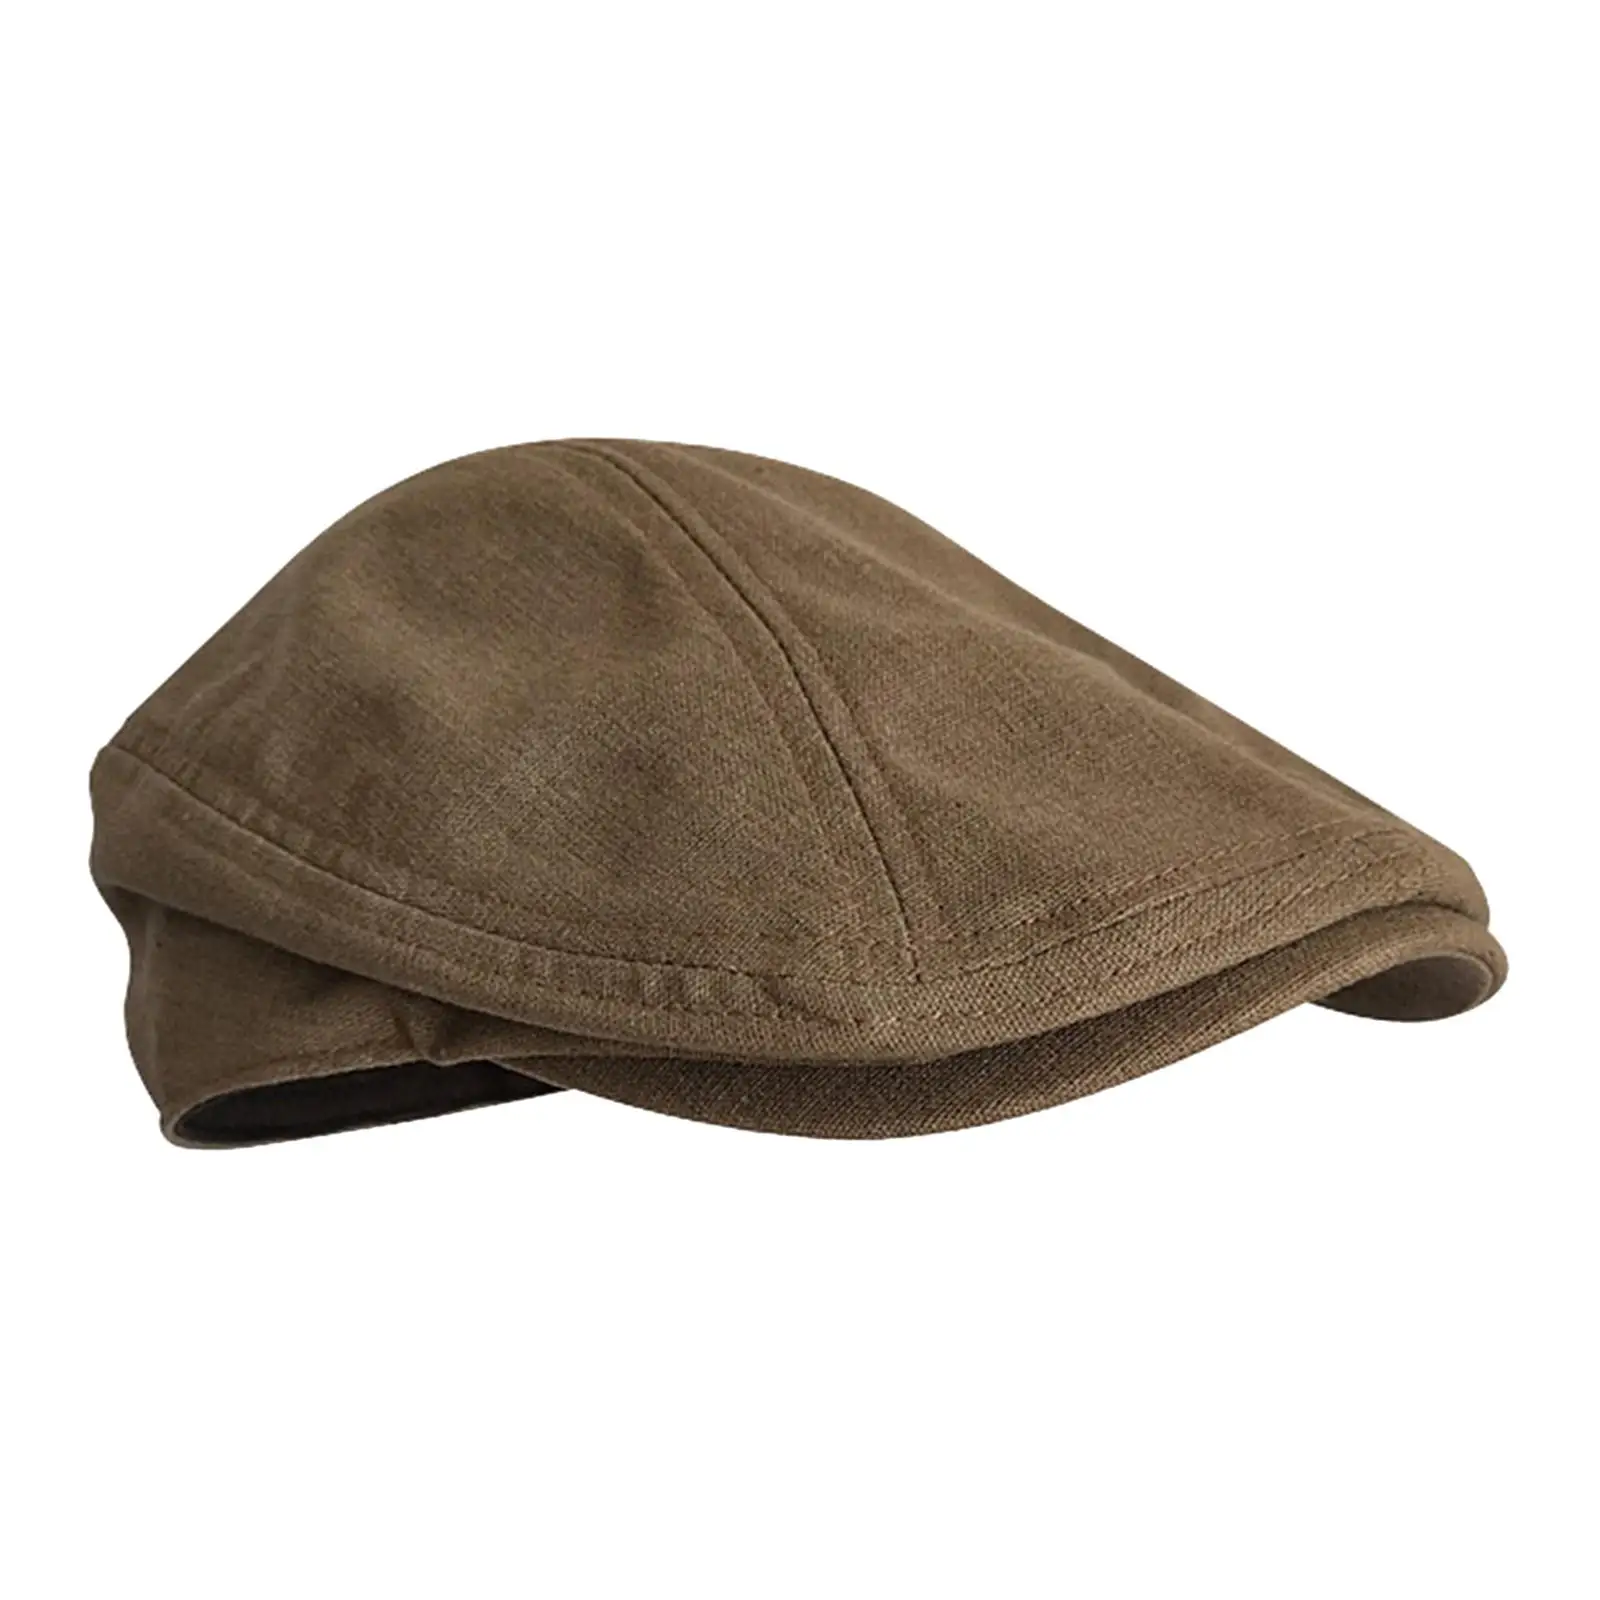 Autumn Winters Hats Octagonal Flat Hat Artist Cap Women Caps Headwear Retro Style Newsboy Hat for Spring Fall